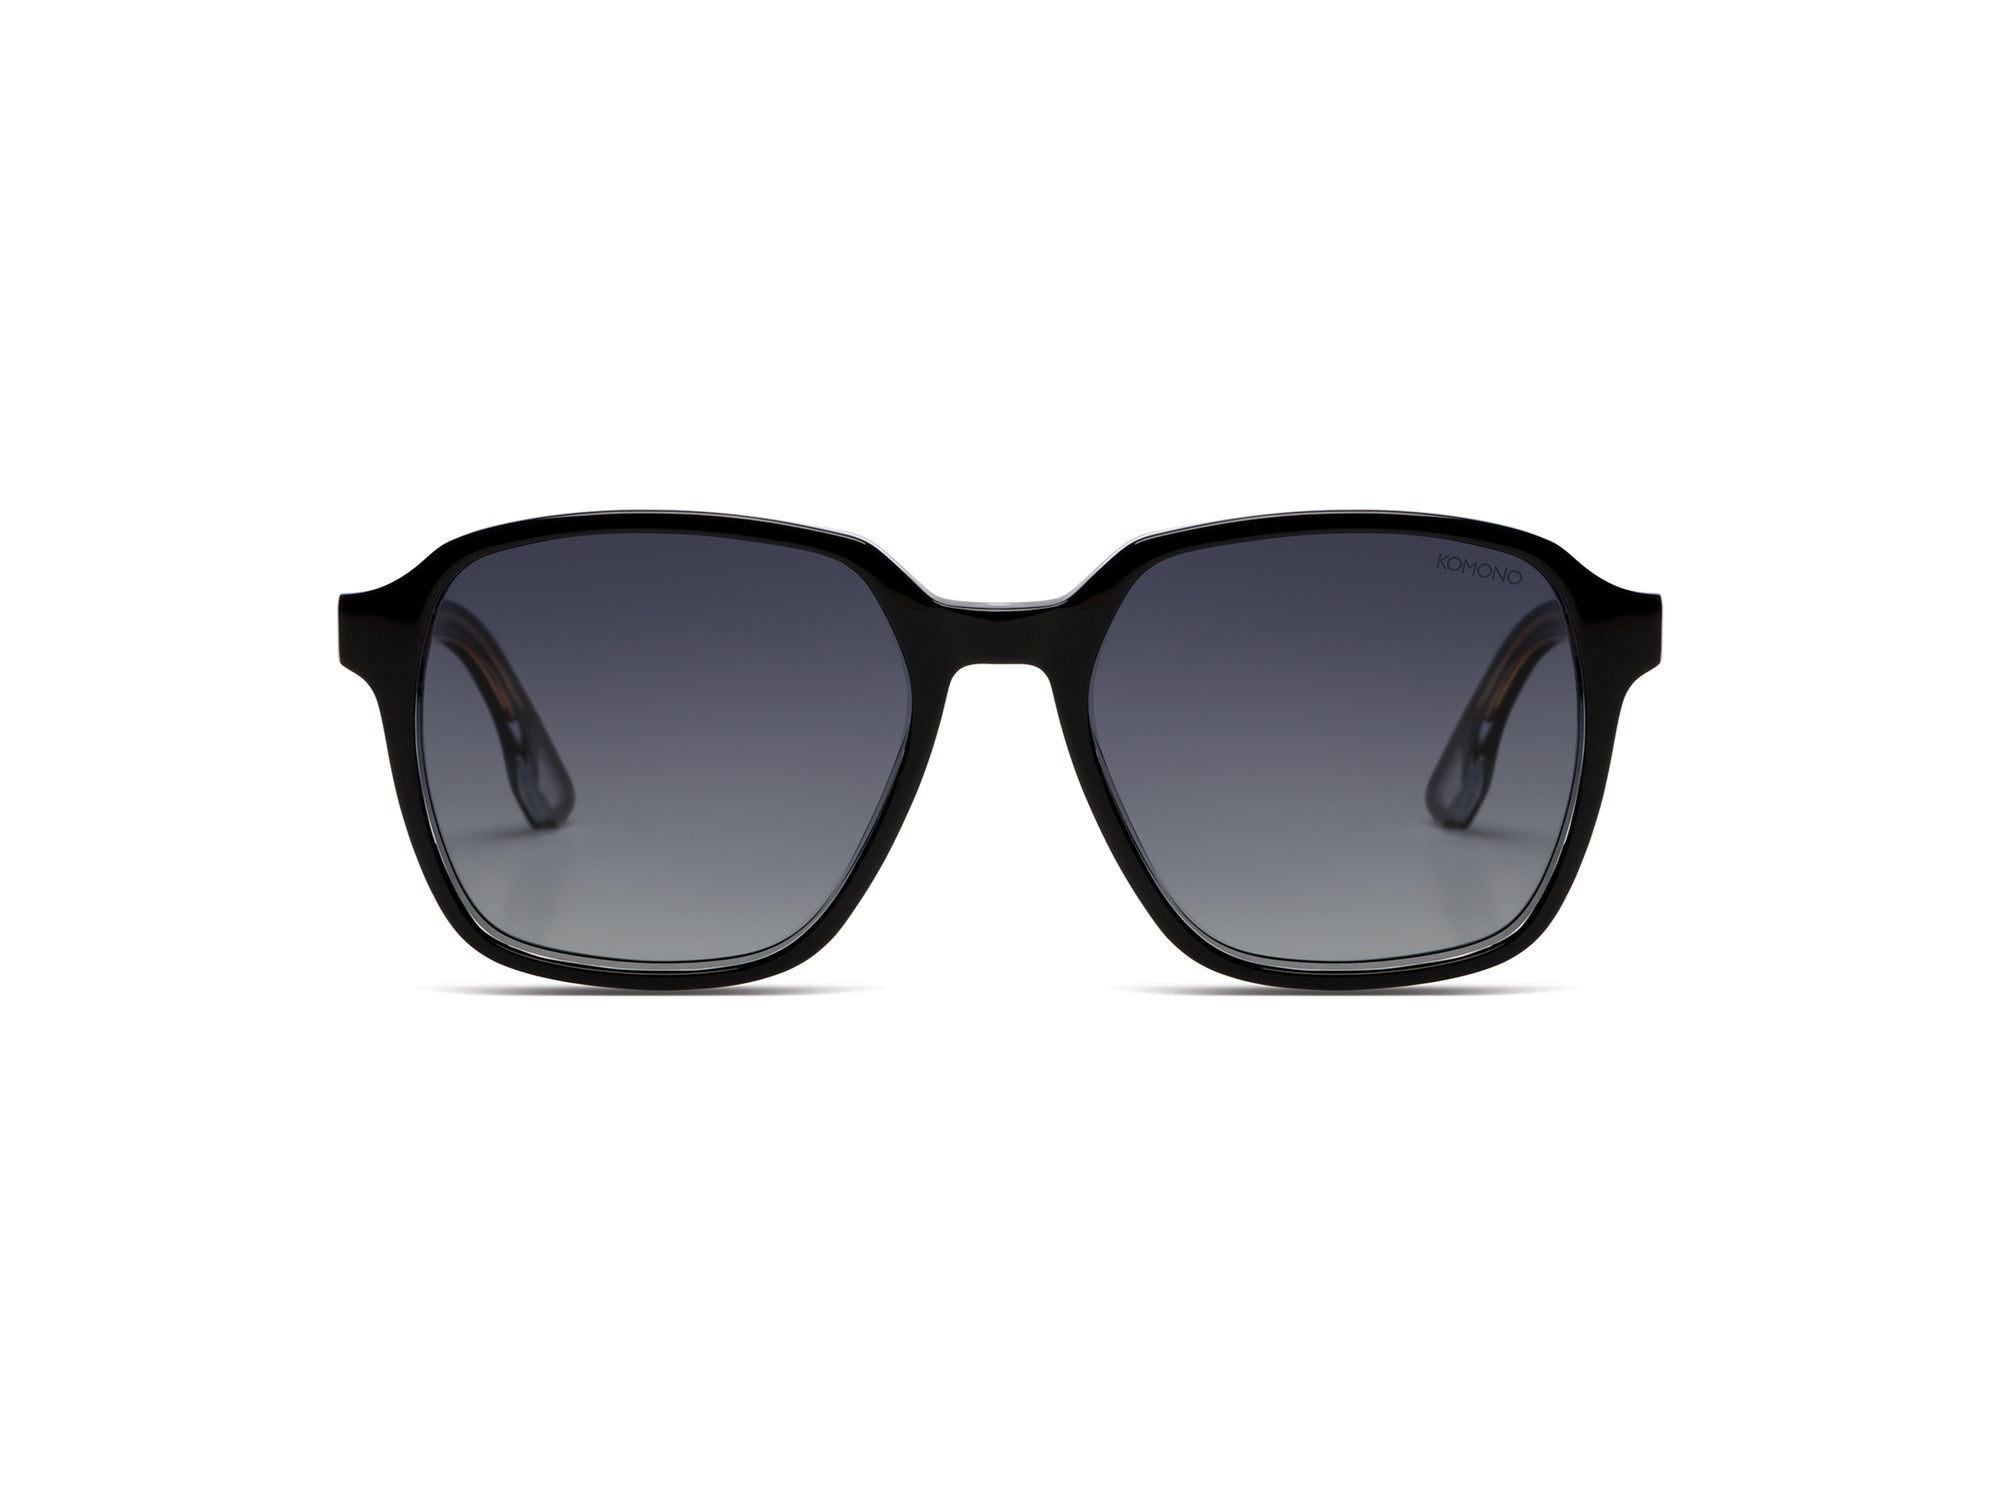 Komono Black Clear Otis Sunglasses